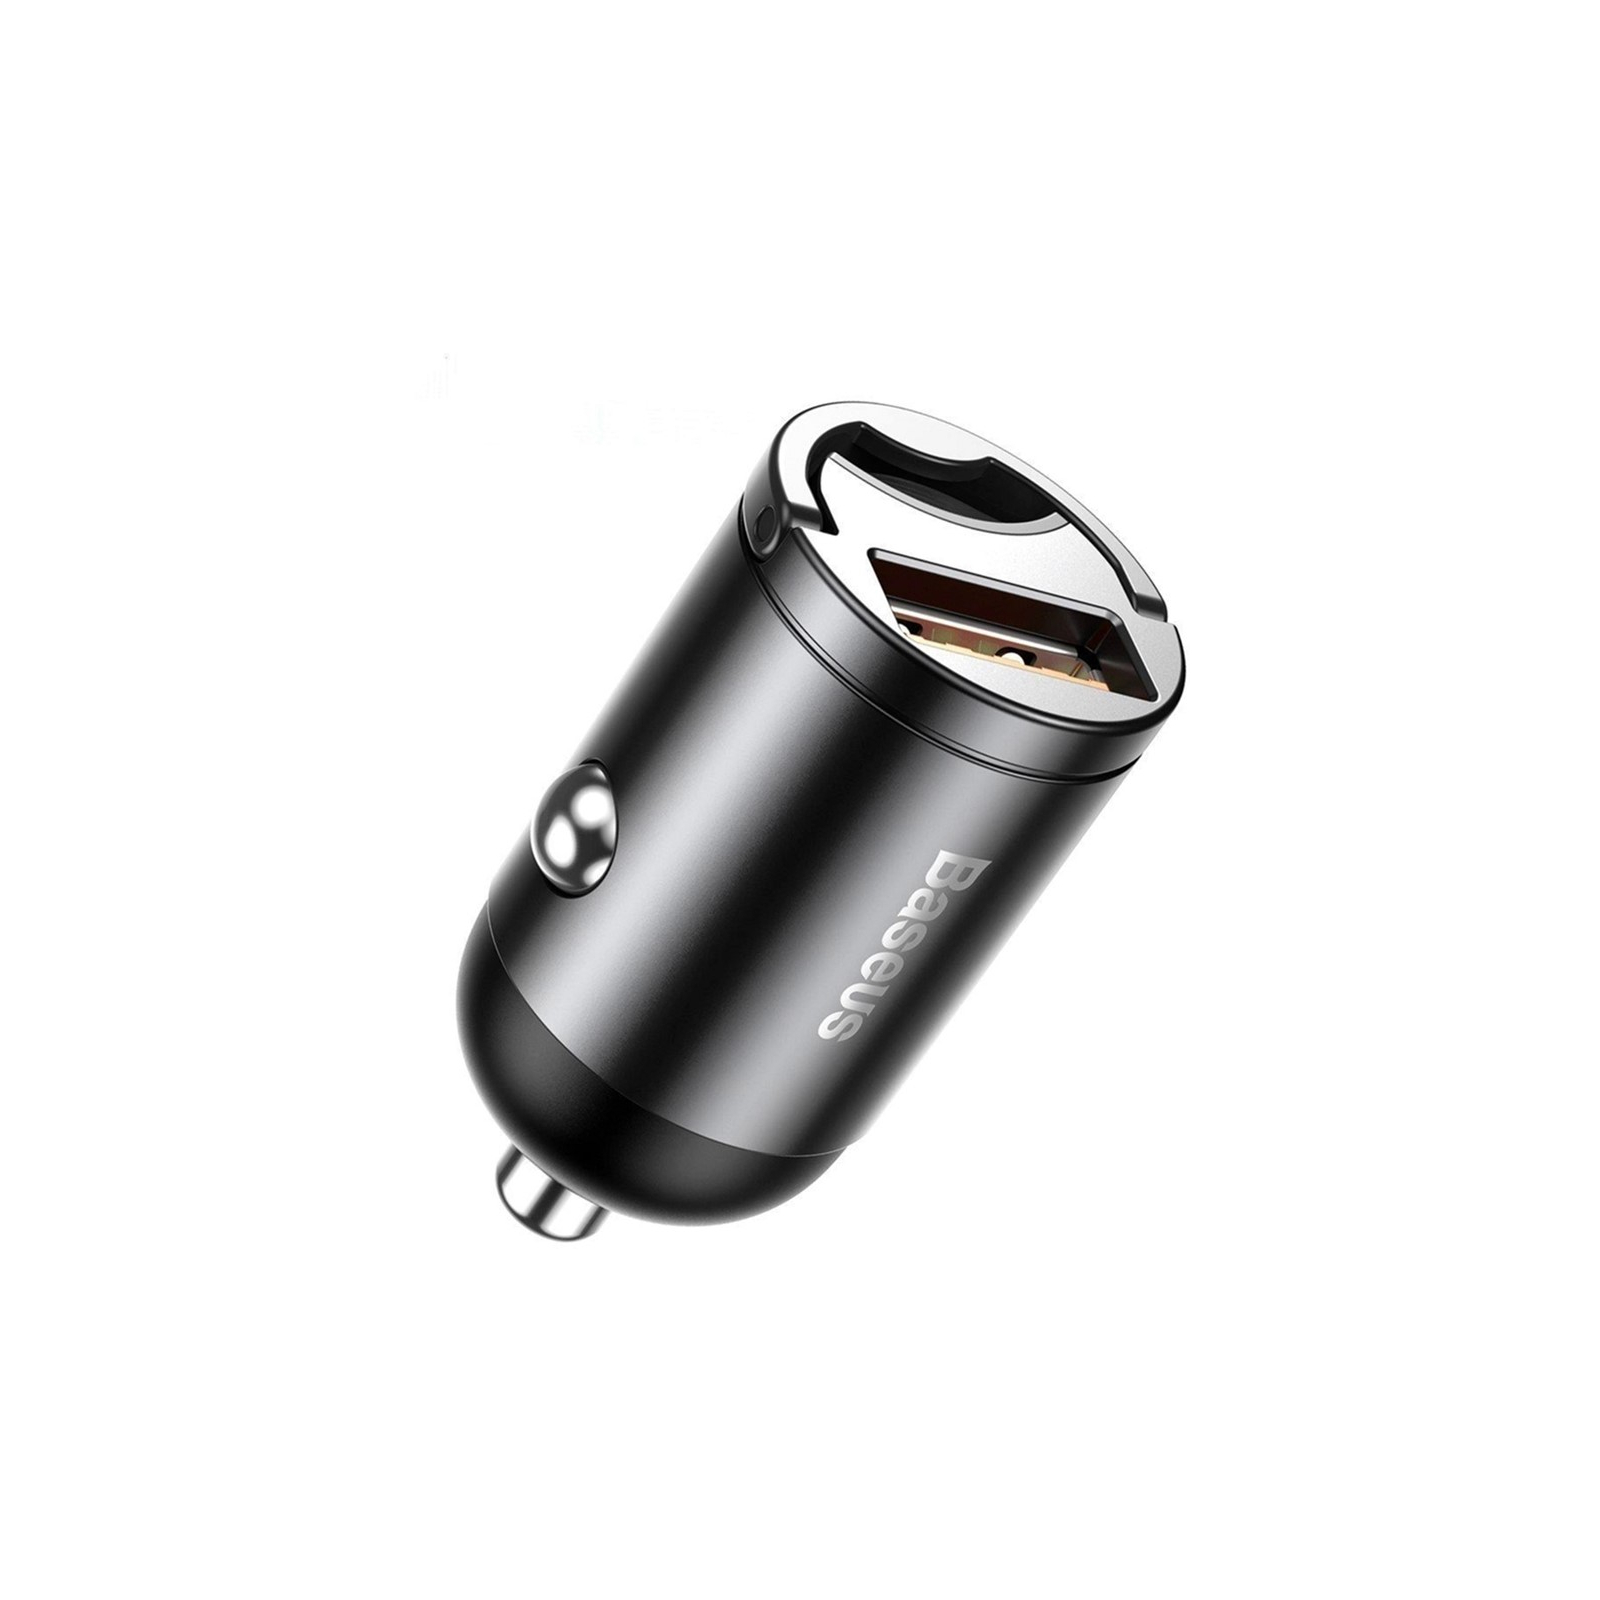 Зарядное устройство Baseus Tiny Star Mini Quick Charge Car Charger USB-A Gray (VCHX-A0G)